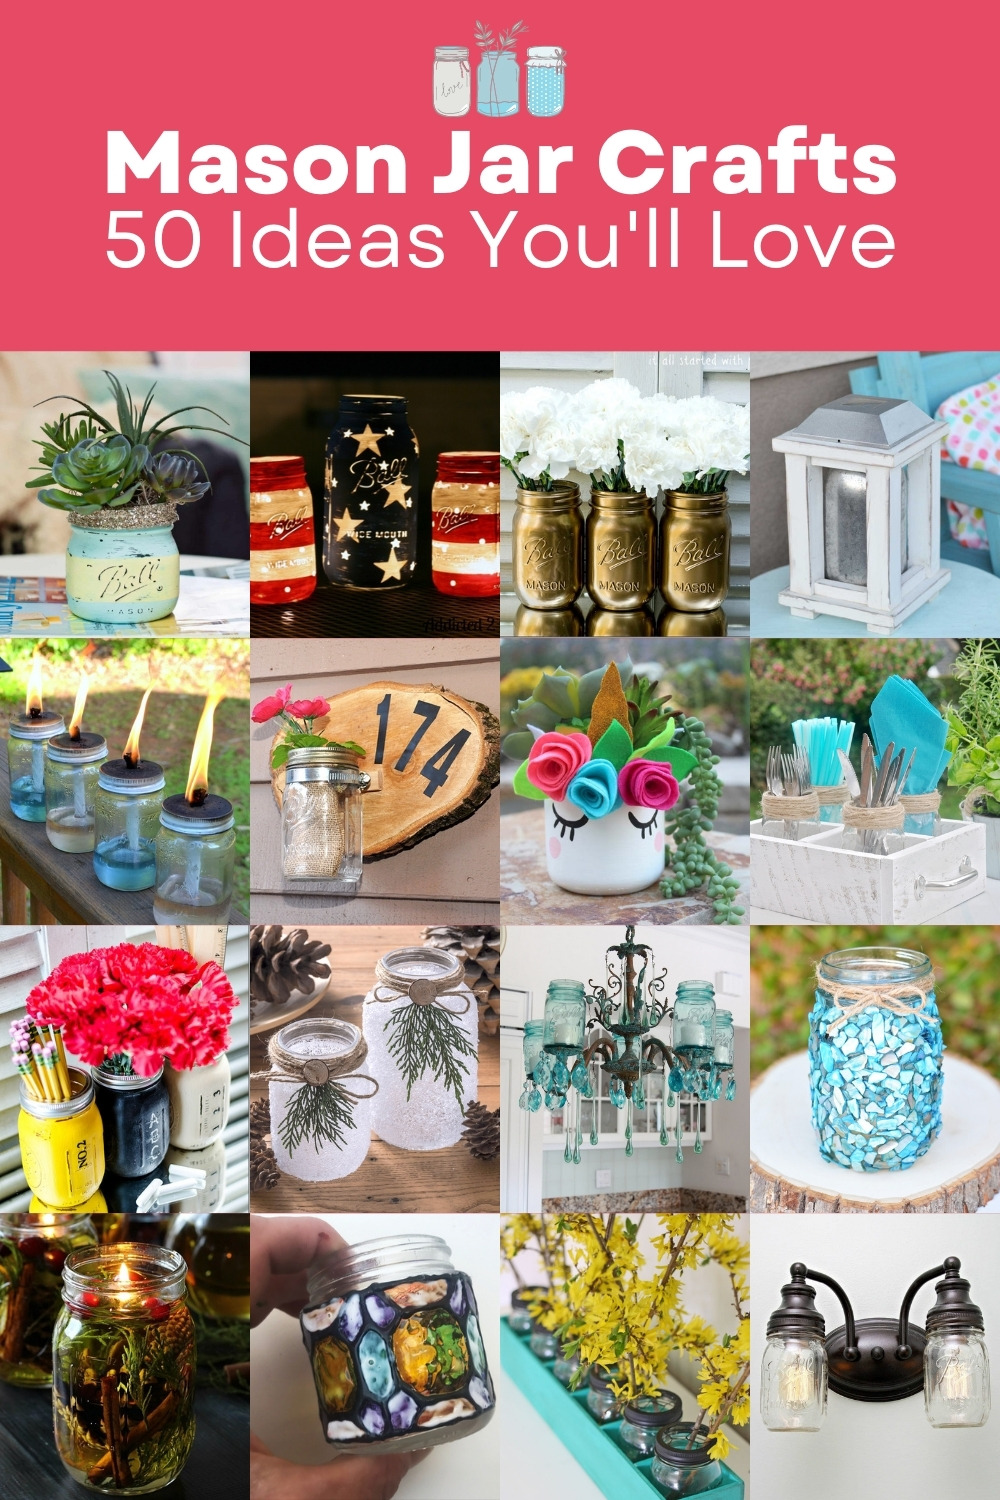 Mason jar crafts - 50 ideas you will love